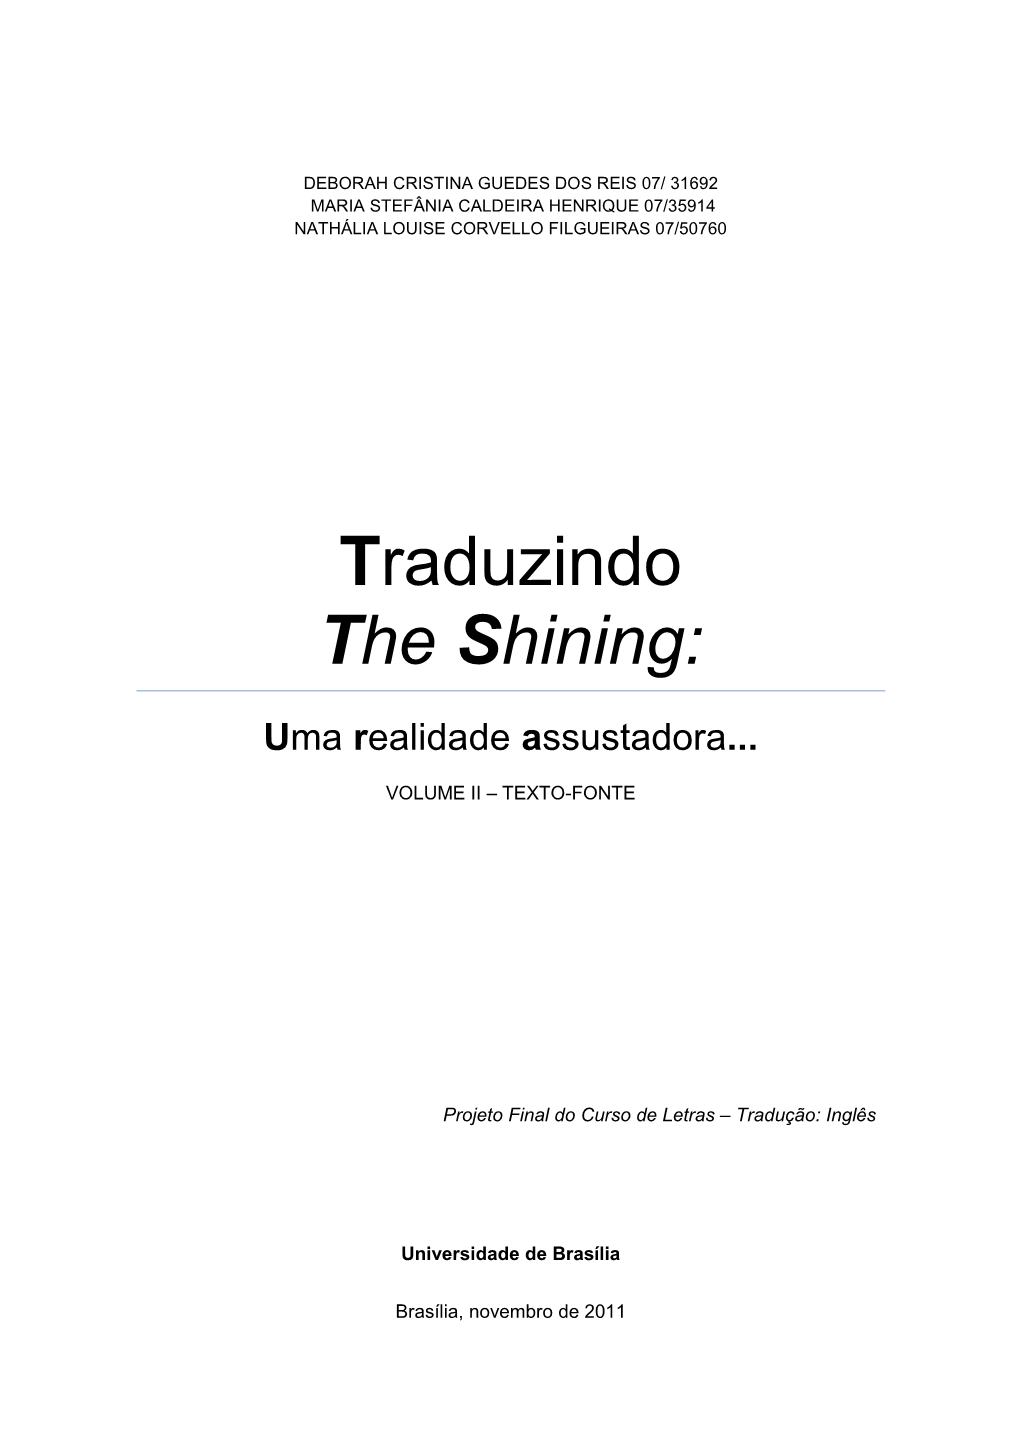 Traduzindo the Shining